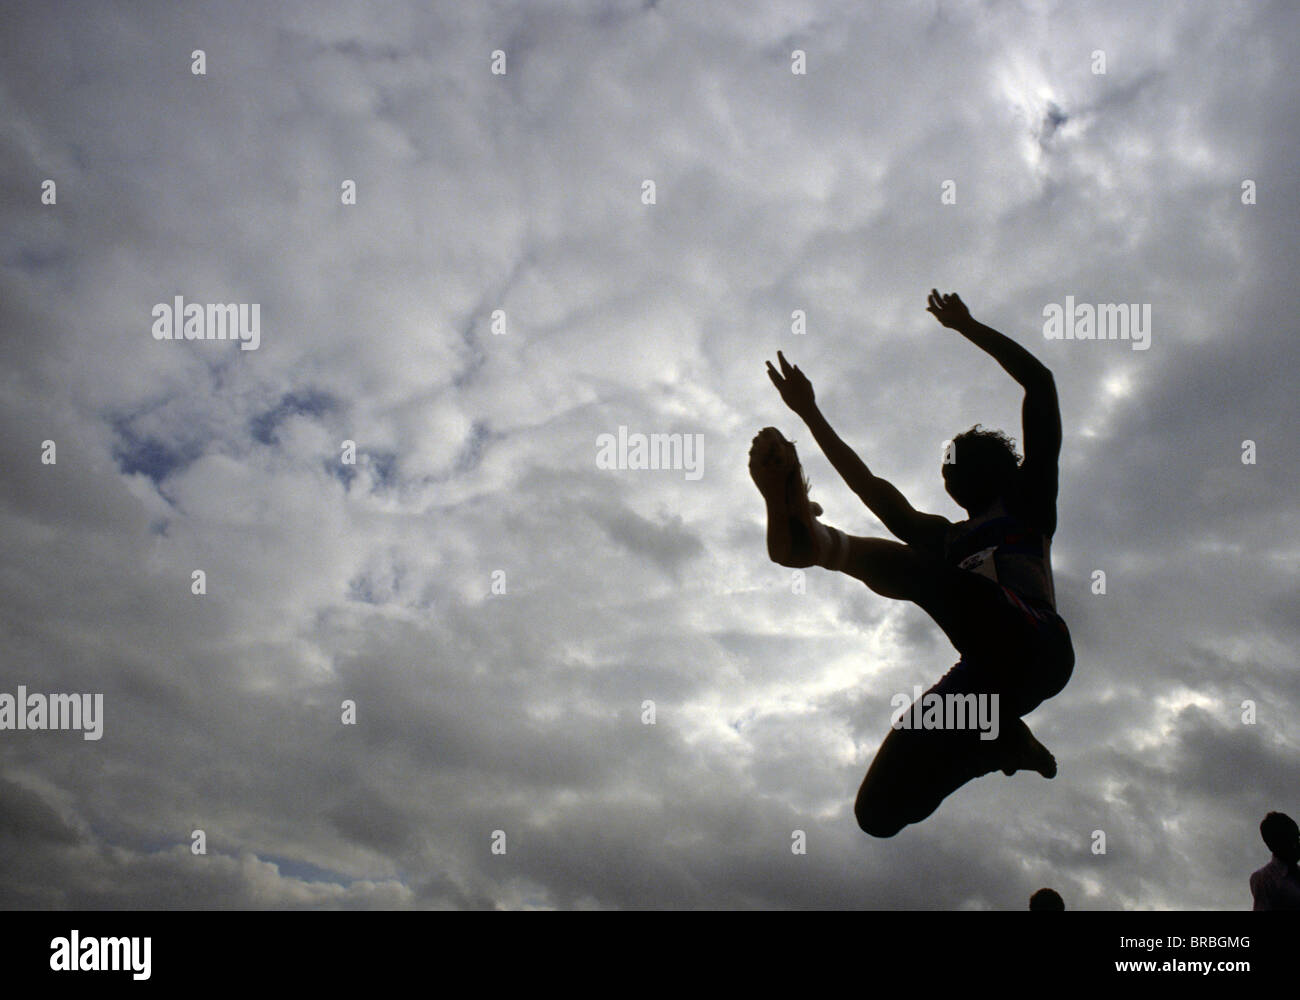 Female long jumper seen from below against stormy skies Stock Photo